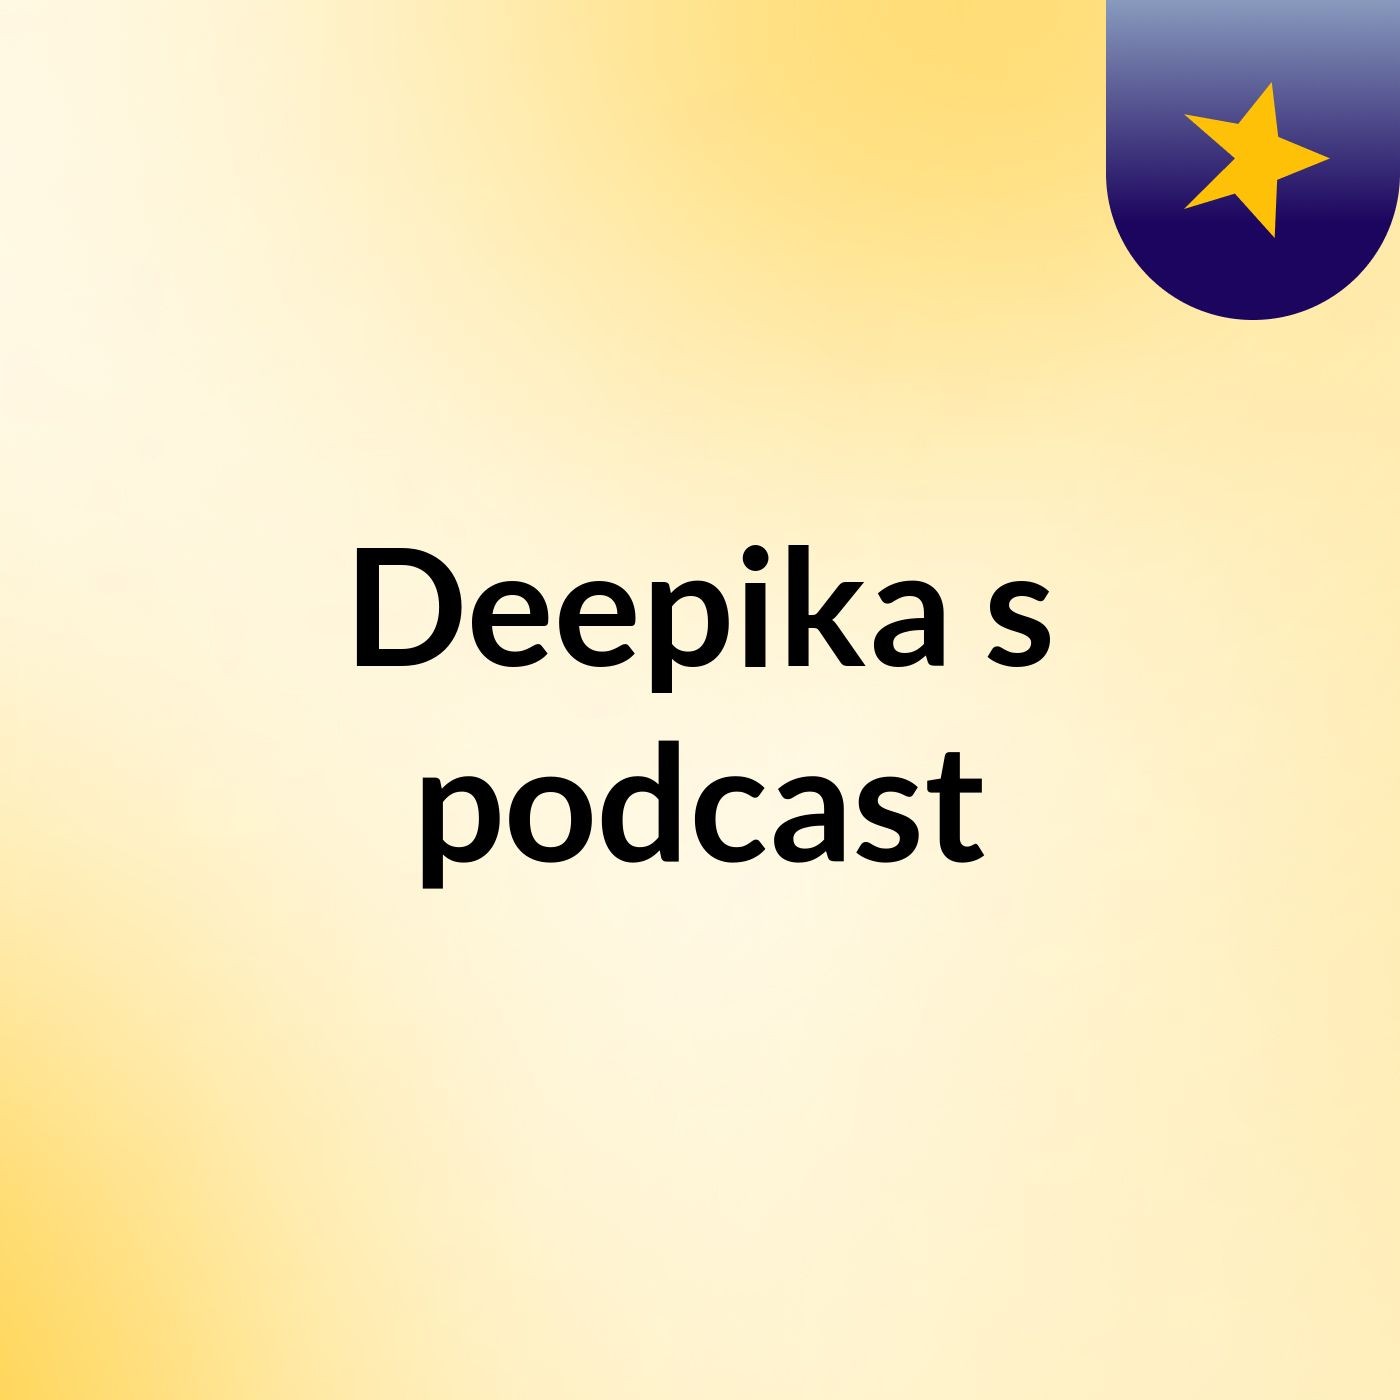 Episode 3 - Deepika's podcast